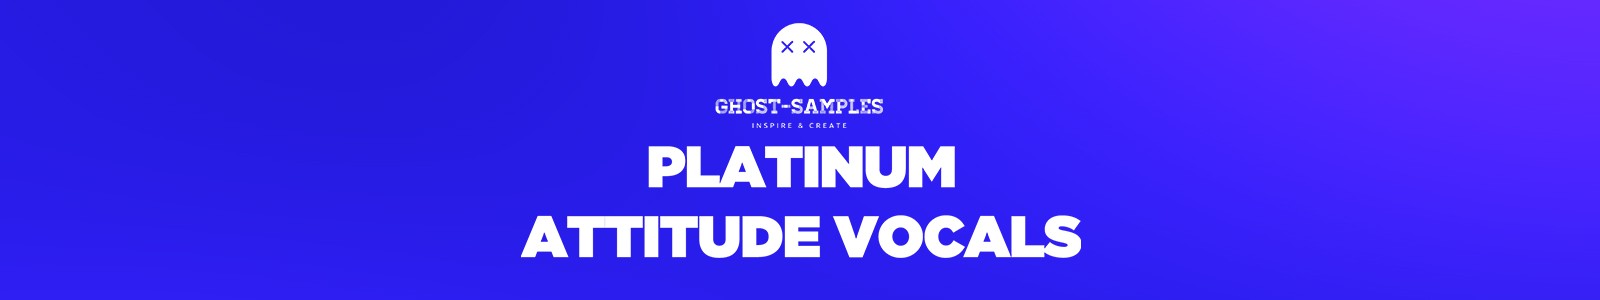 Platinum: Attitude Vocals by Ghost Samples